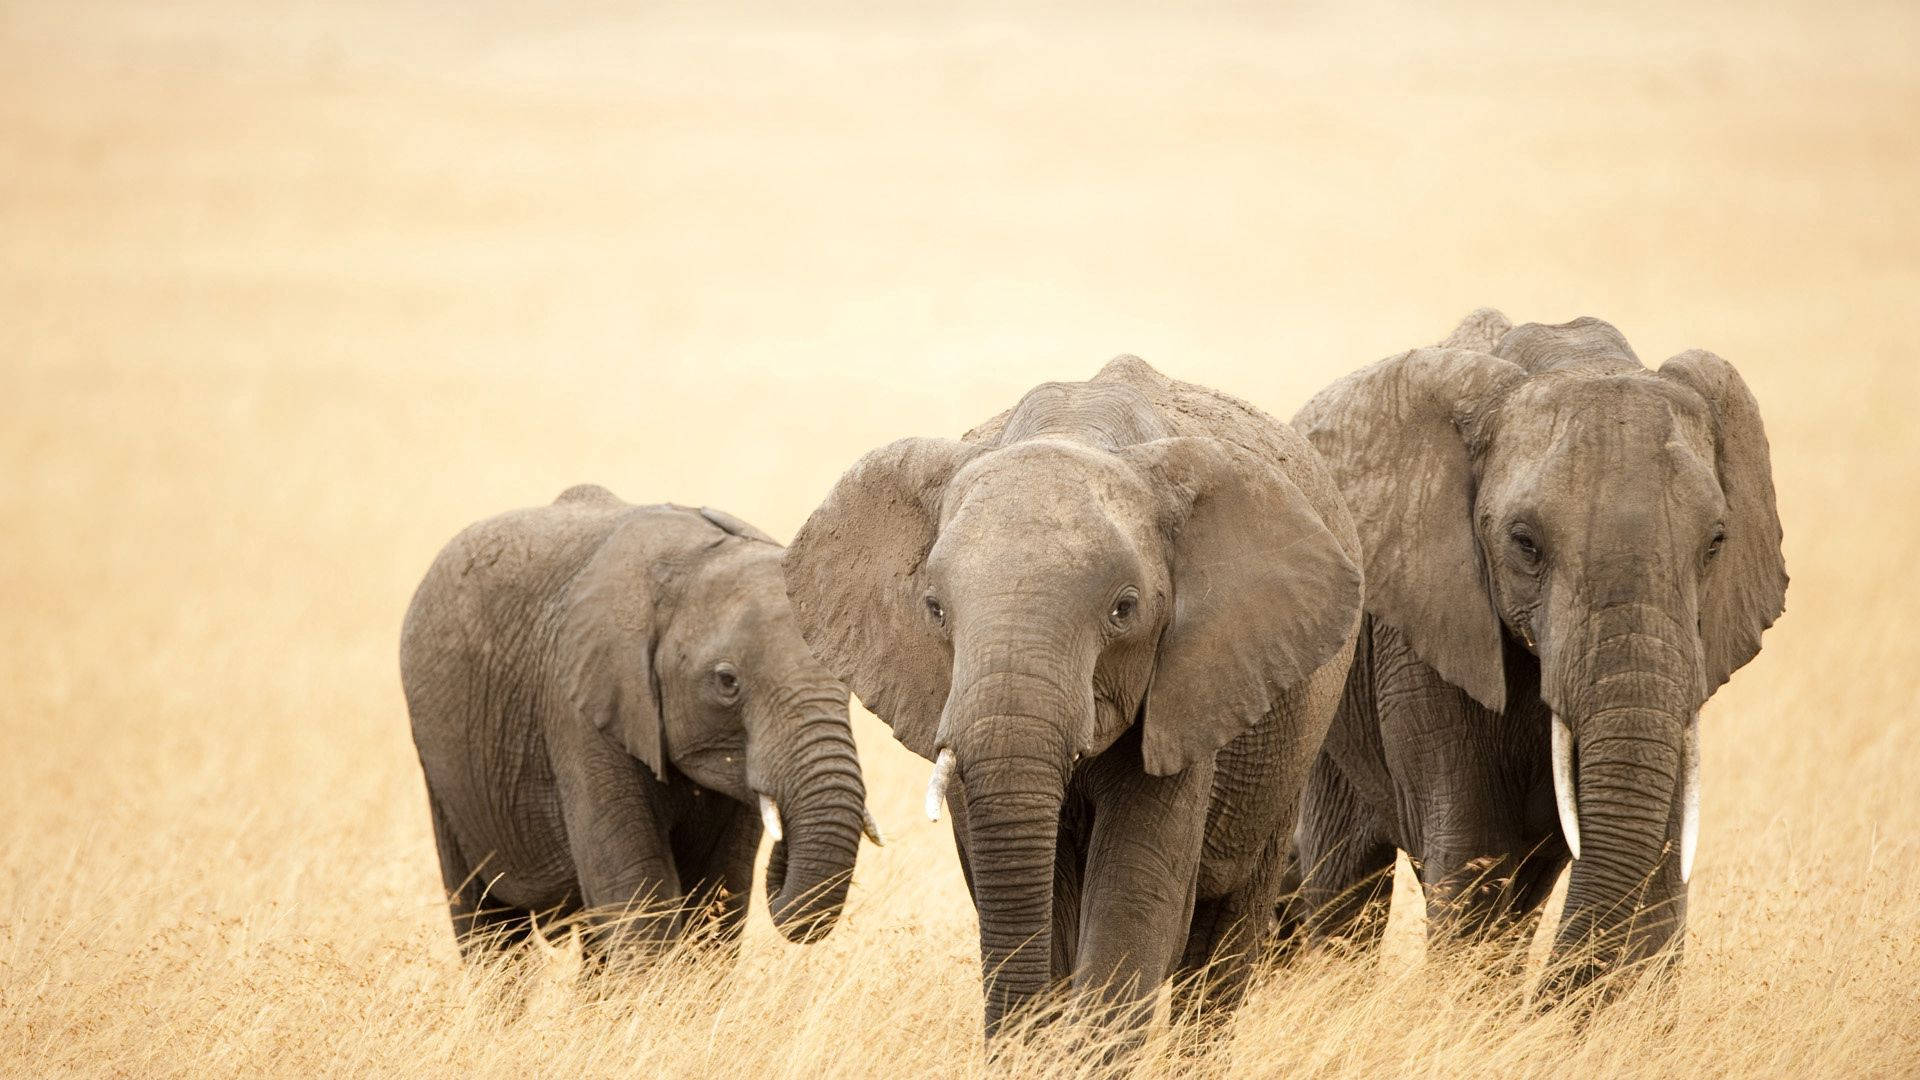 Elephant family roaming in a grassy field Wallpaper